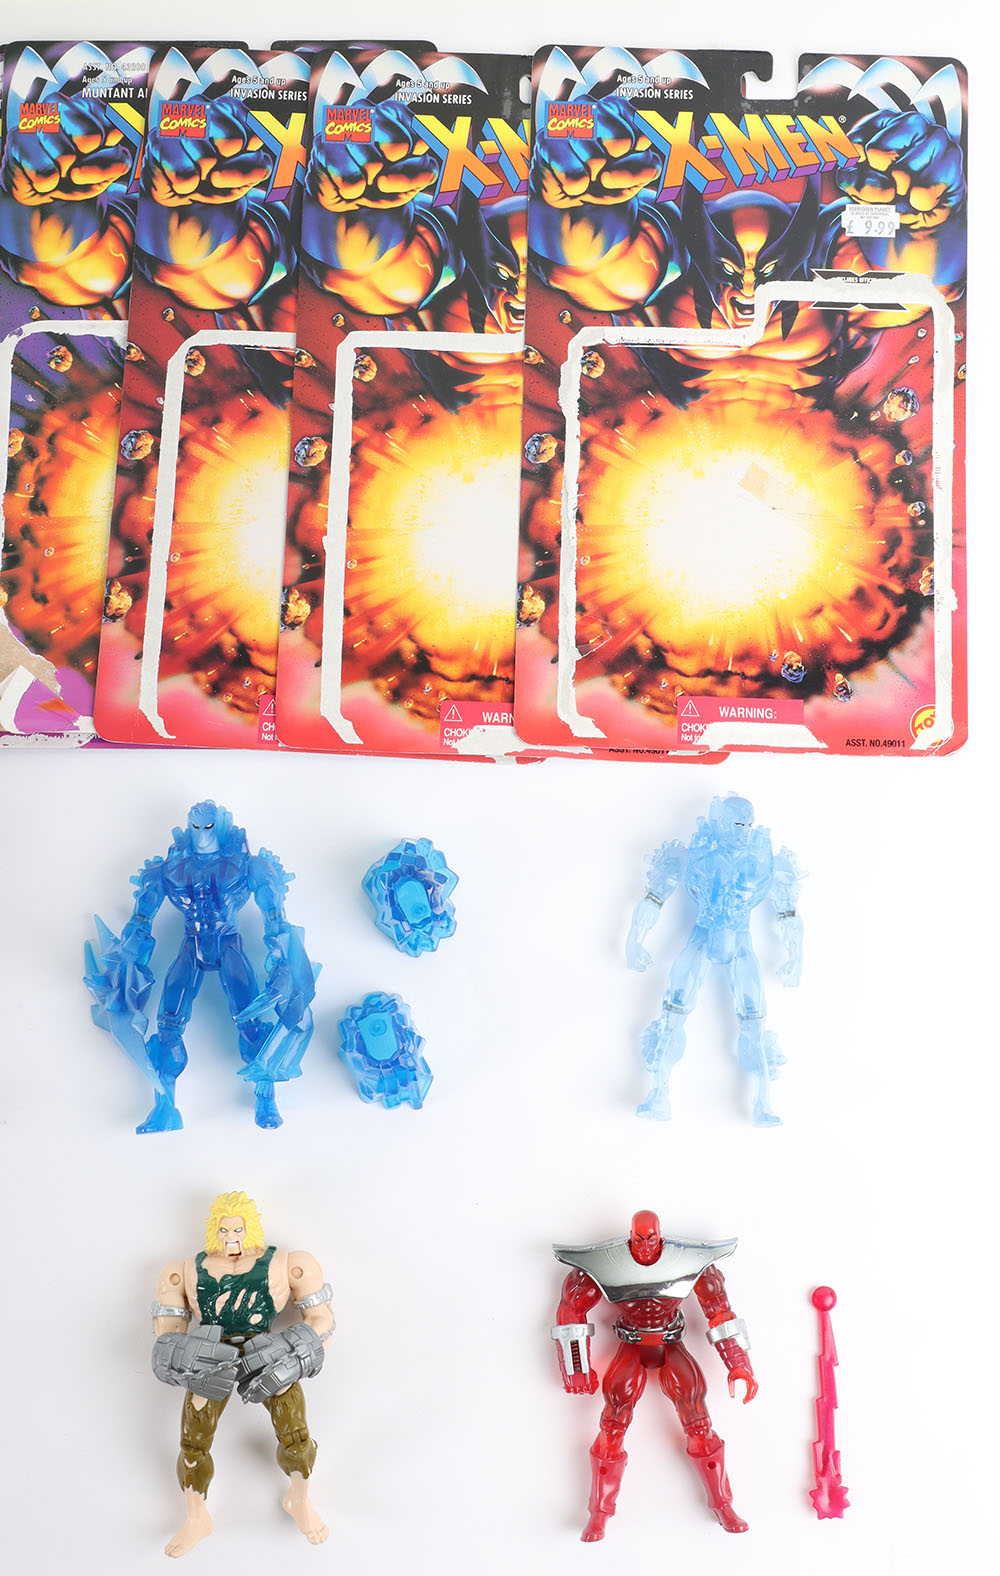 X-men Toybiz Mixed series figures - Image 2 of 5